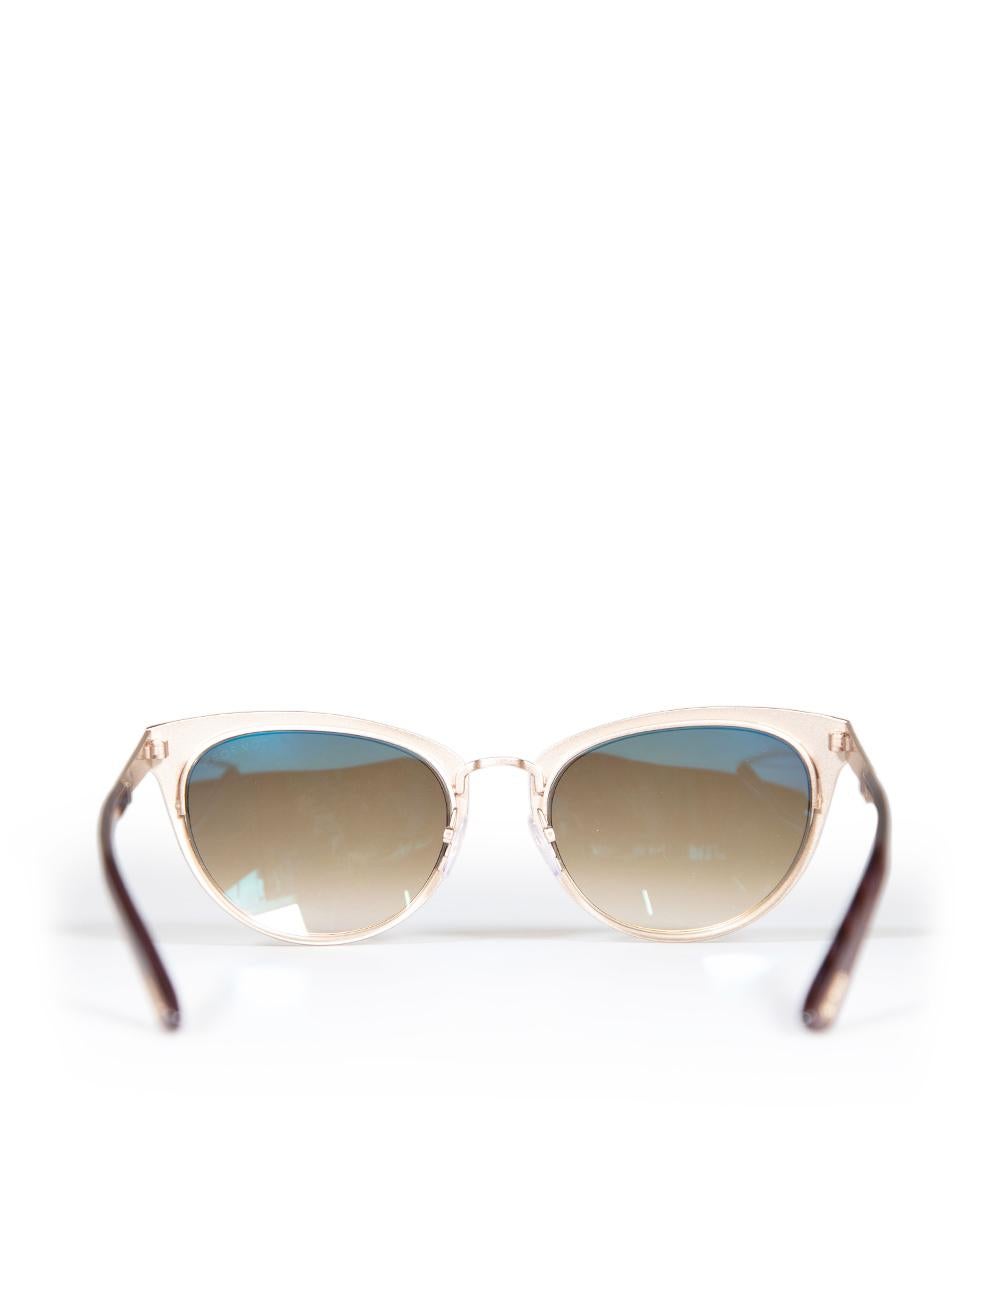 Women's Tom Ford Shiny Dark Brown Nina Cat Eye Sunglasses For Sale